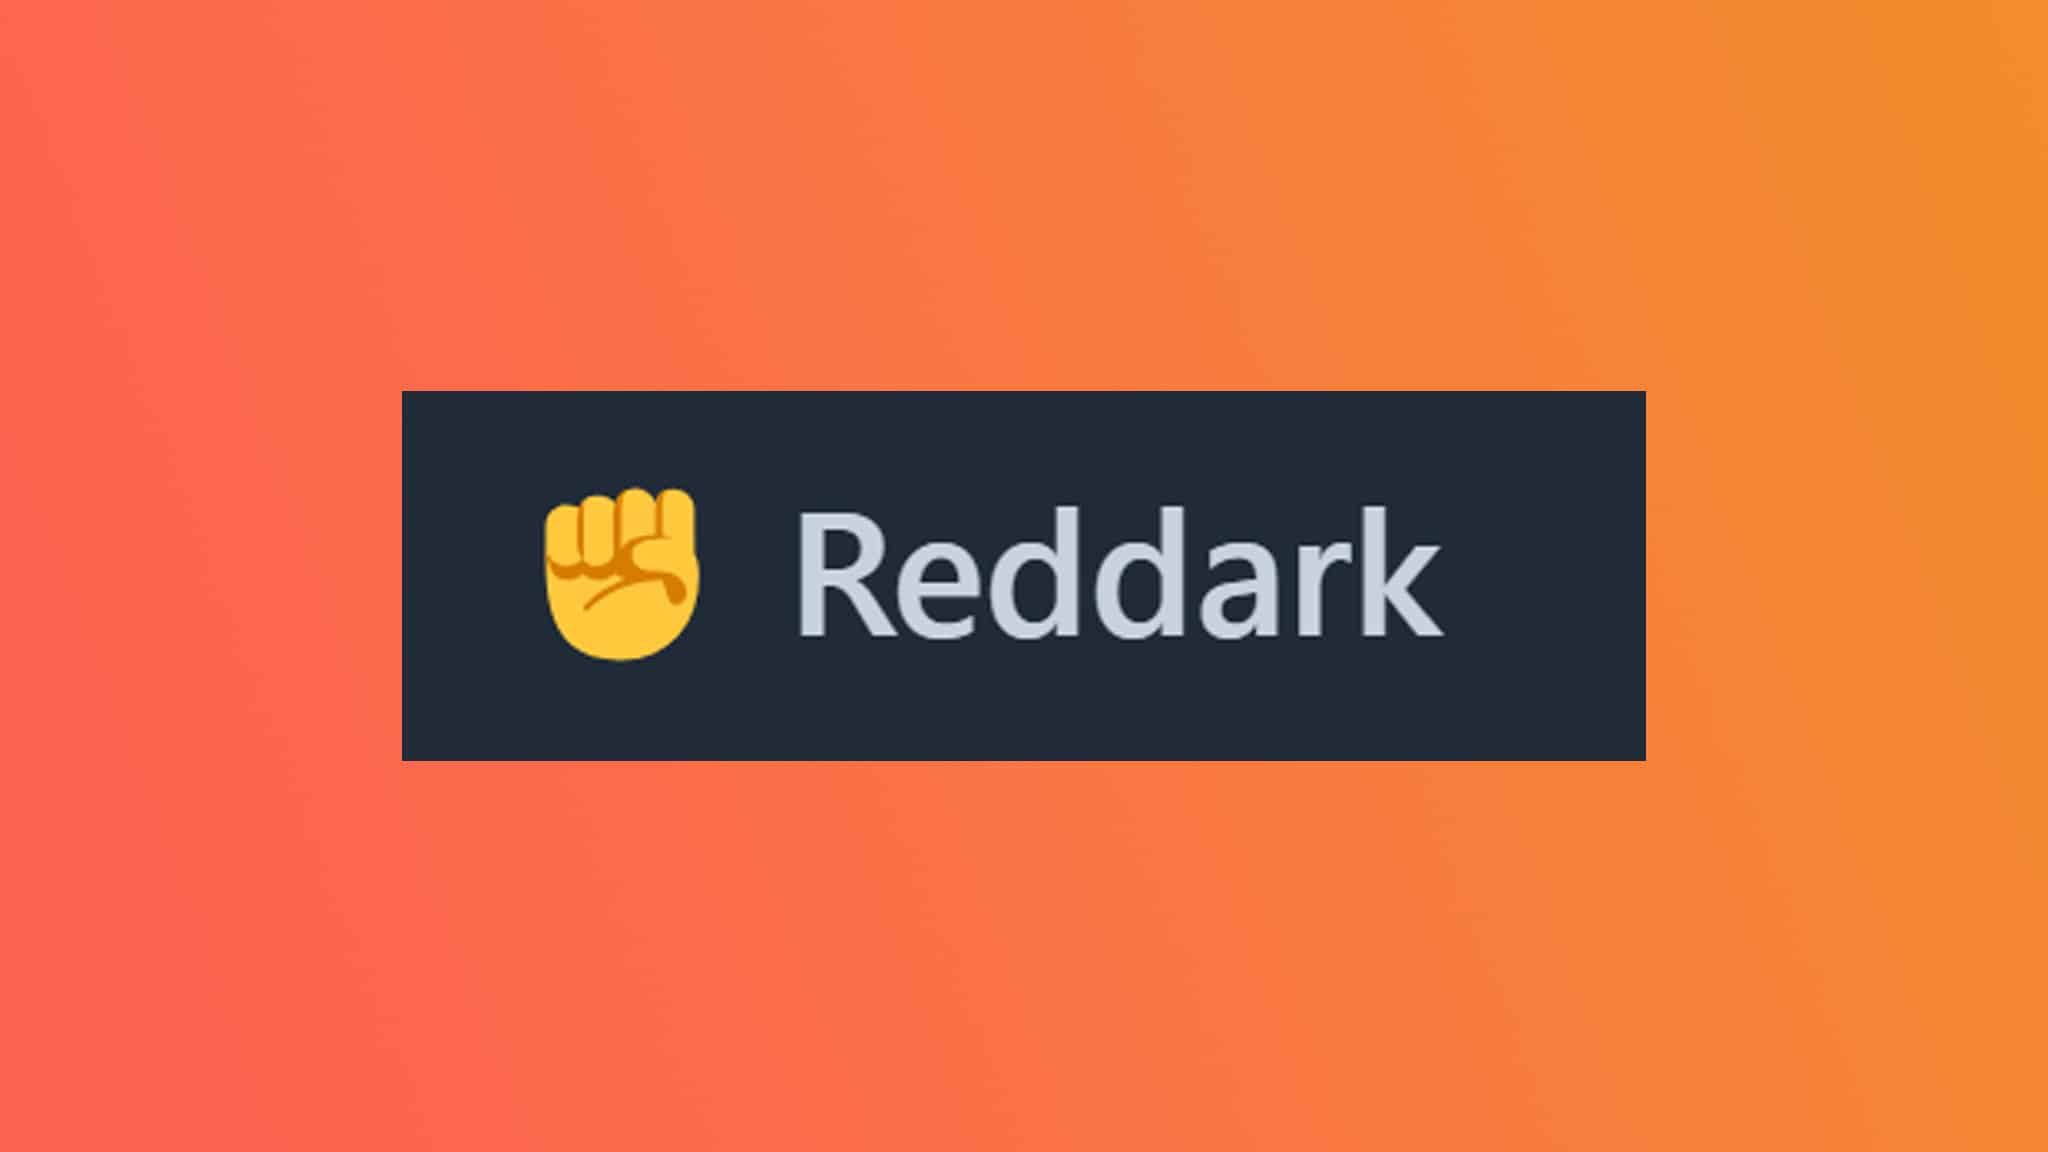 Reddark: Has your favorite Subreddit gone private?